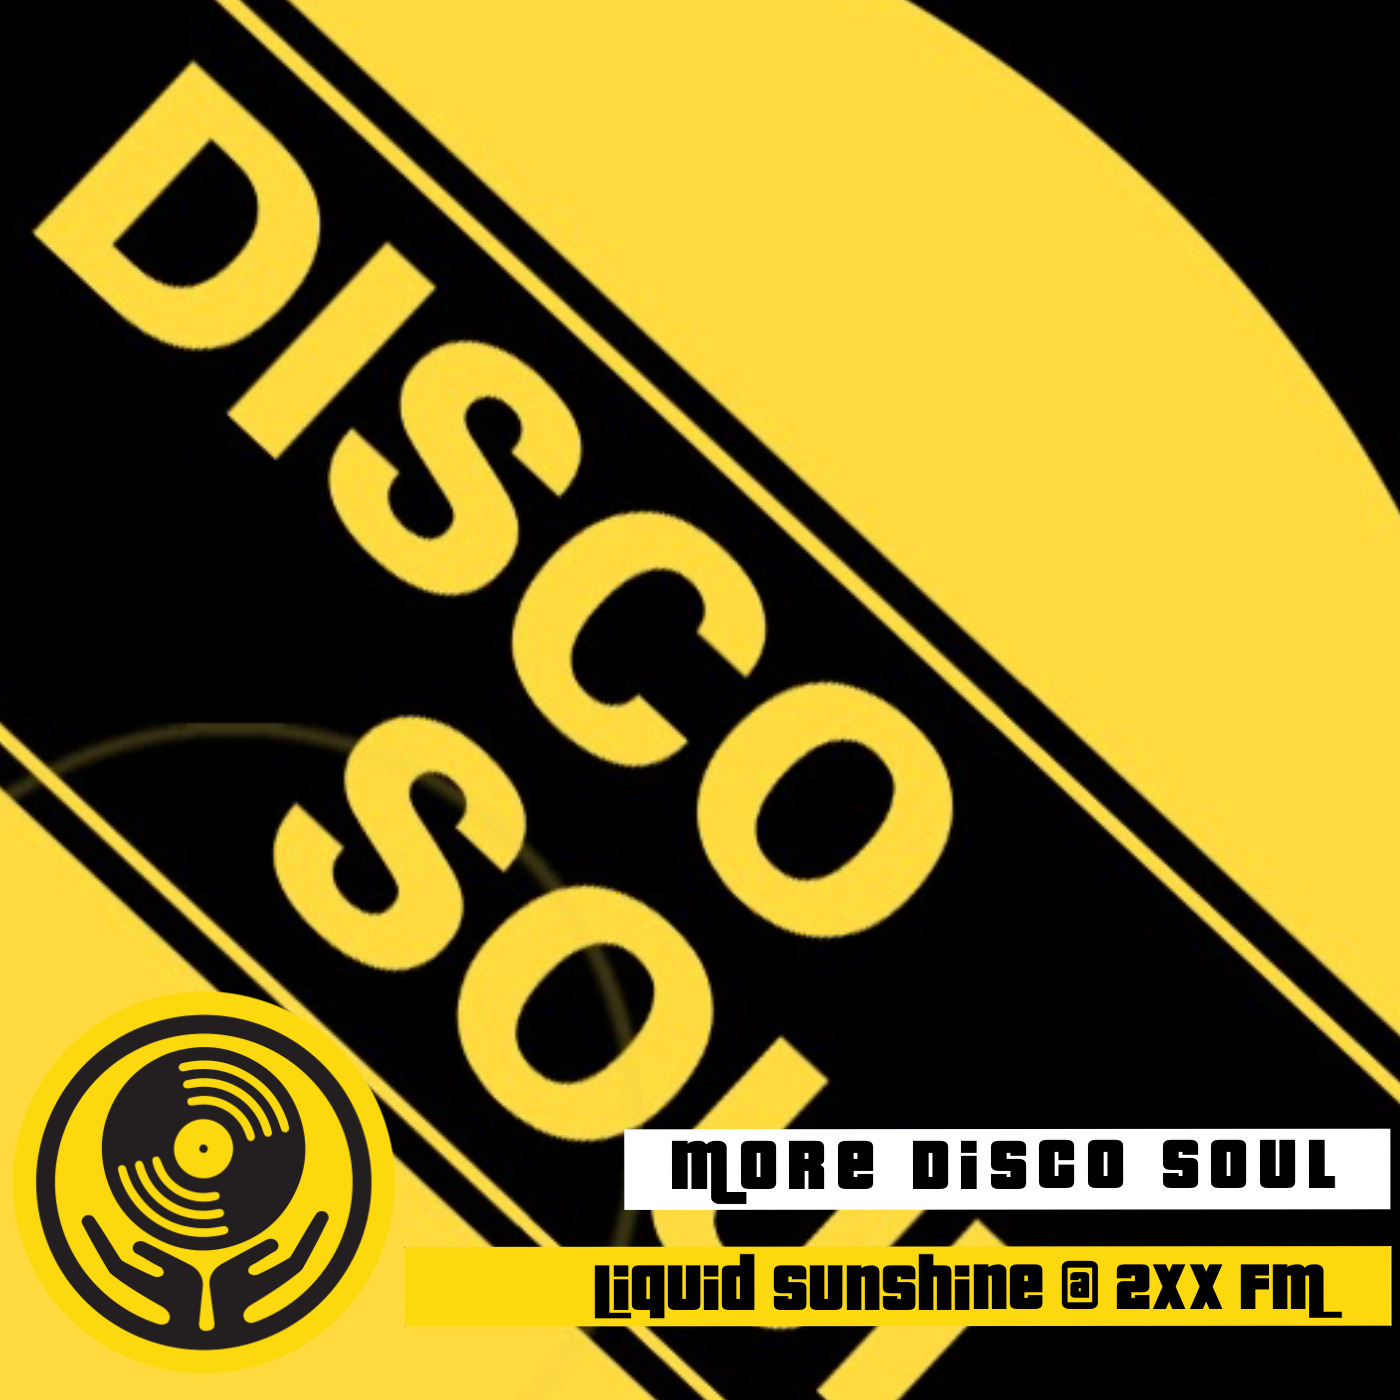 Show #133 - Rare Disco Soul - Liquid Sunshine @ 2XX FM - 04-02-2021